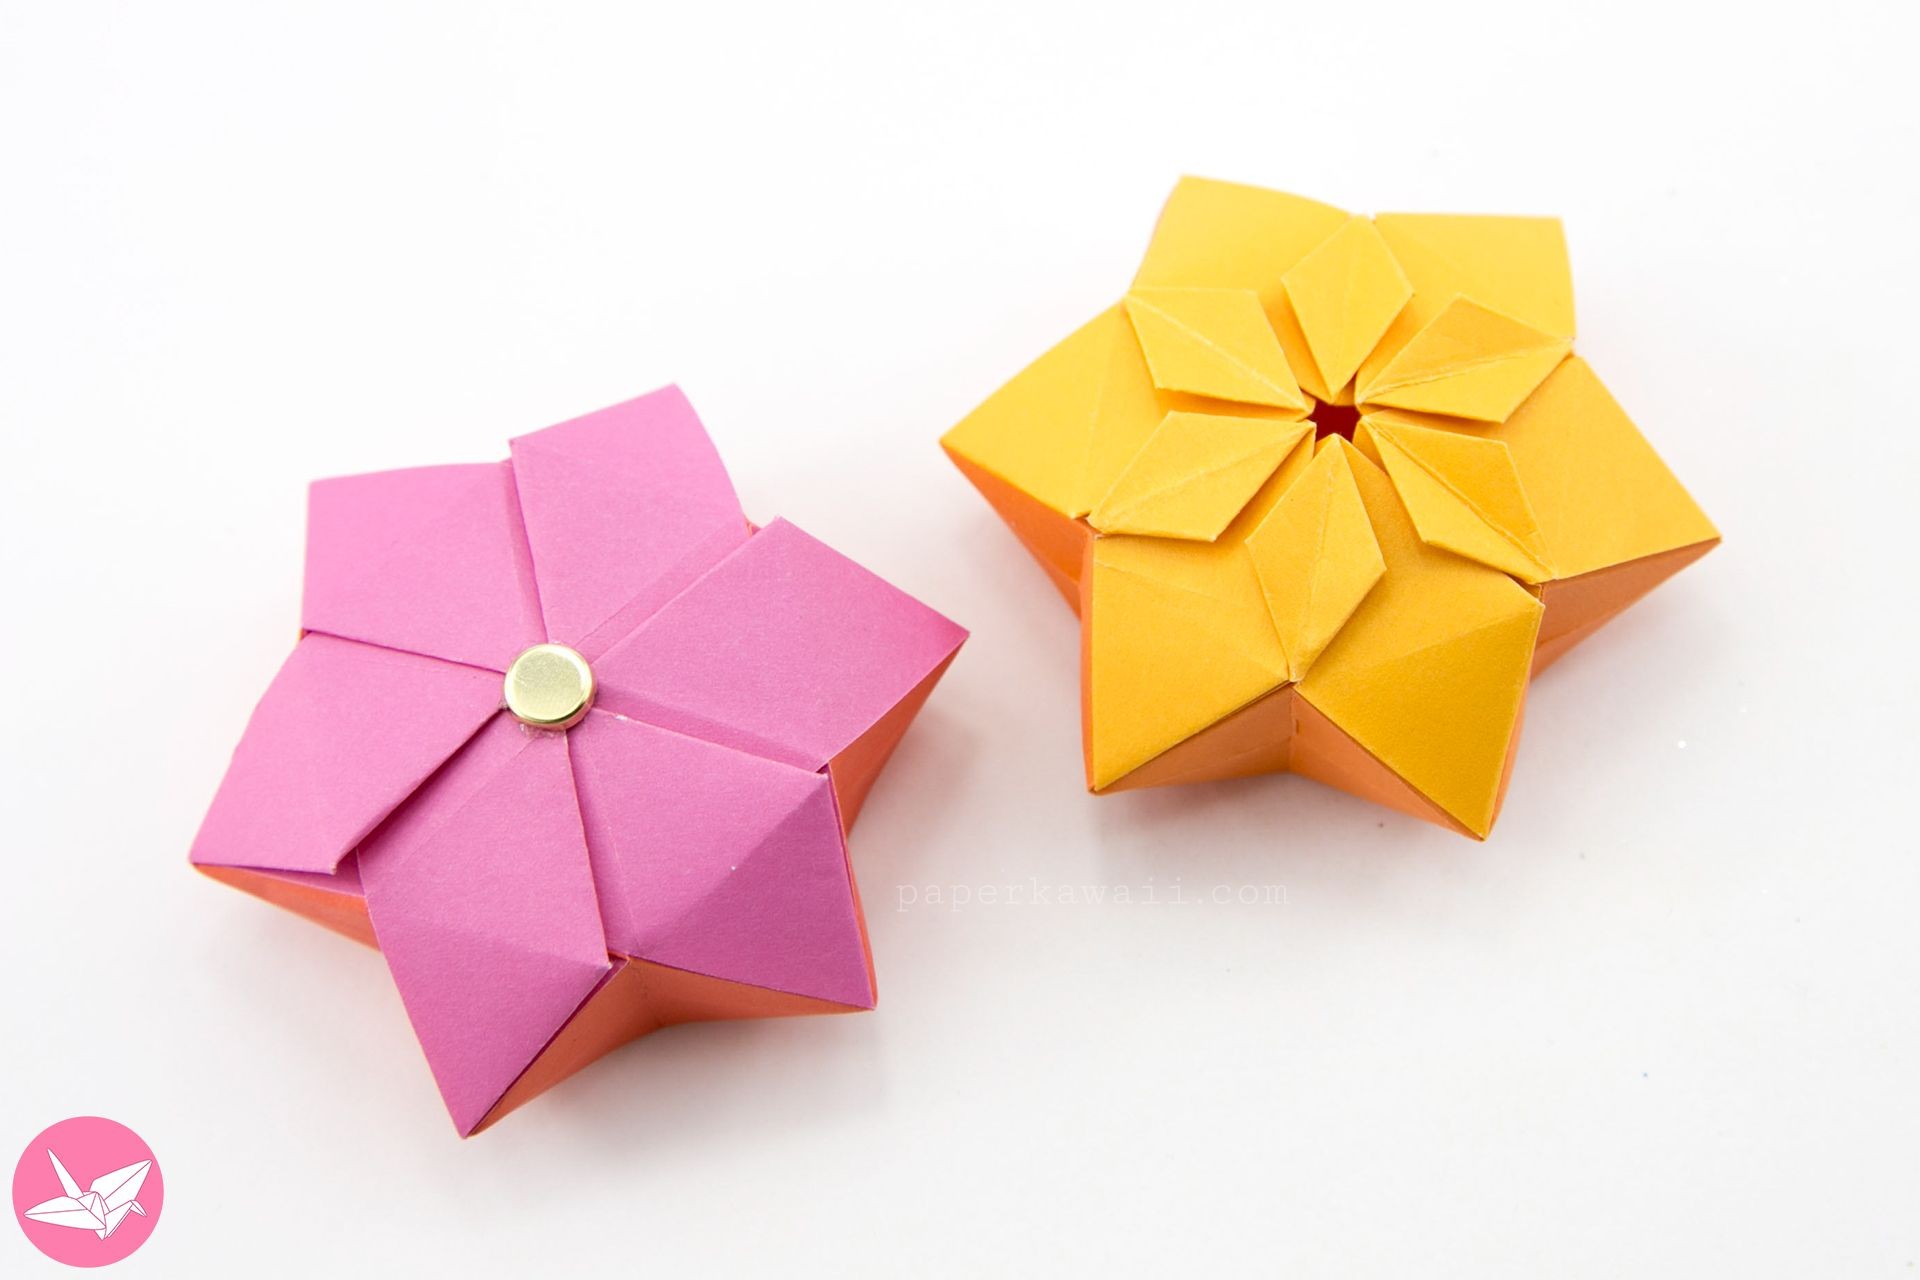 Papercraft Paper origami Hexagonal Puffy Star Tutorial